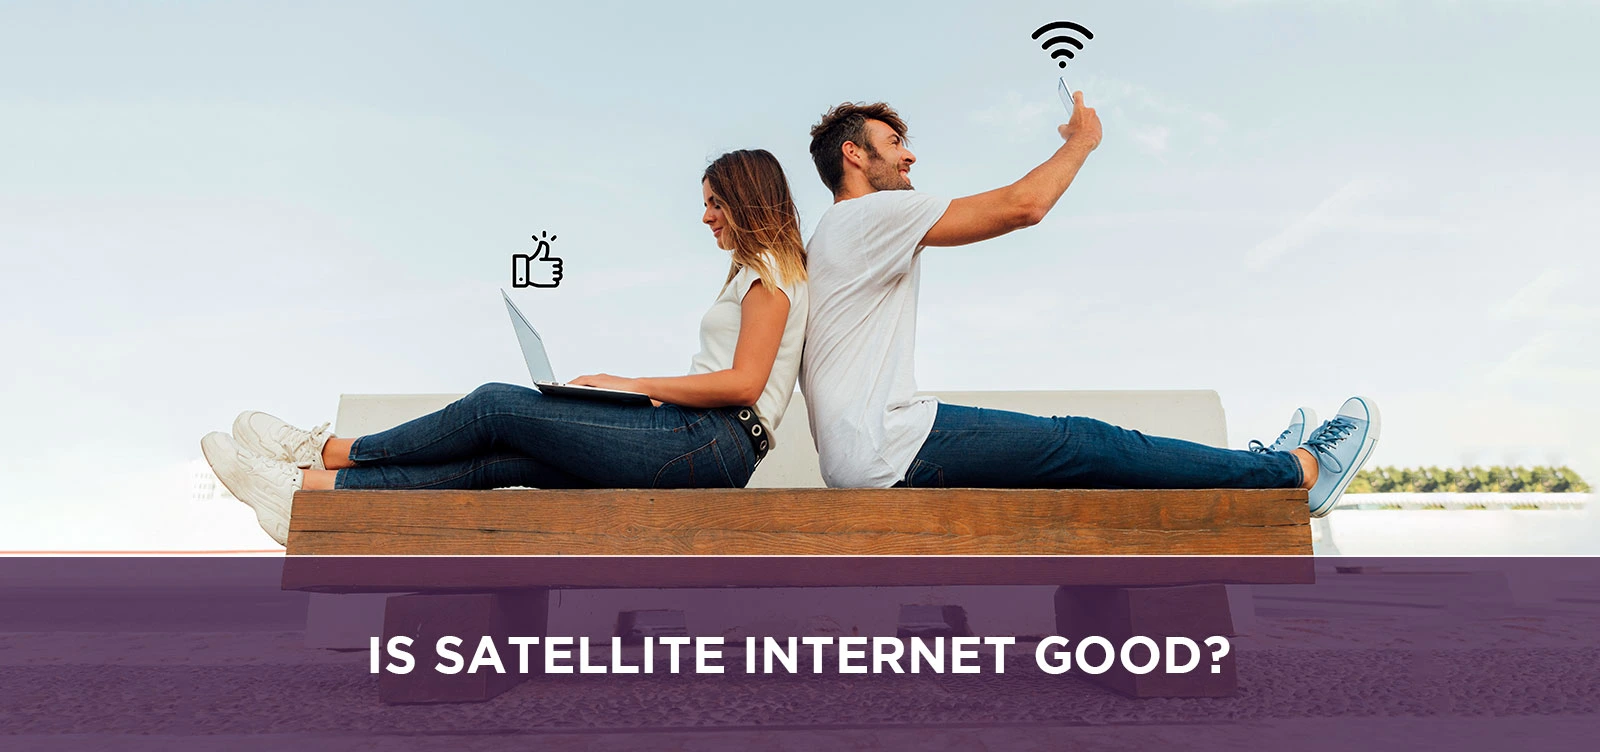 Is satellite internet good?